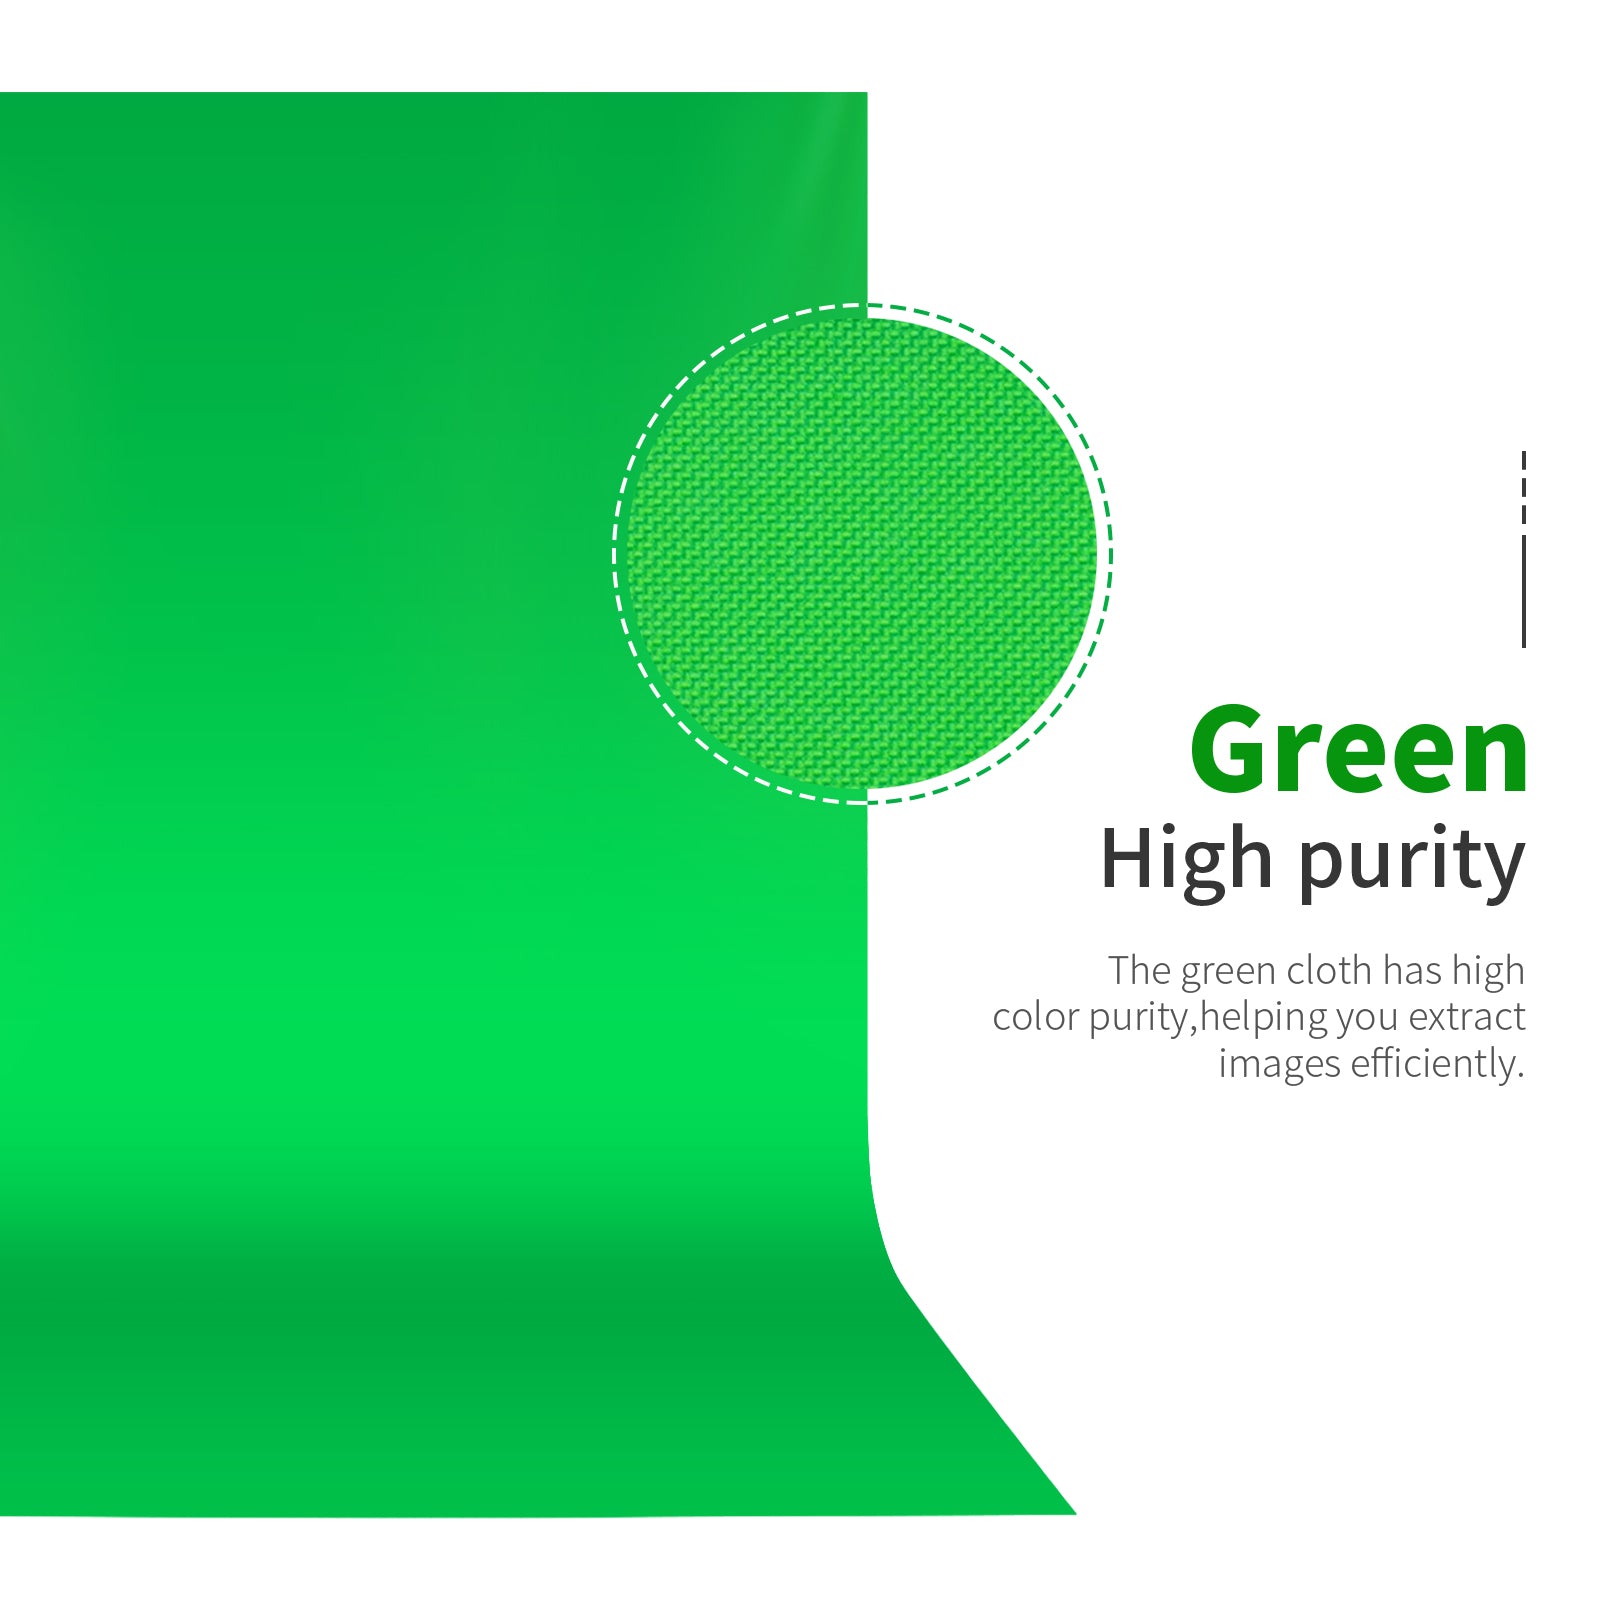 NEEWER 10x12 Ft/3x3.6 M Green Chromakey Fiber Backdrop Background Scre